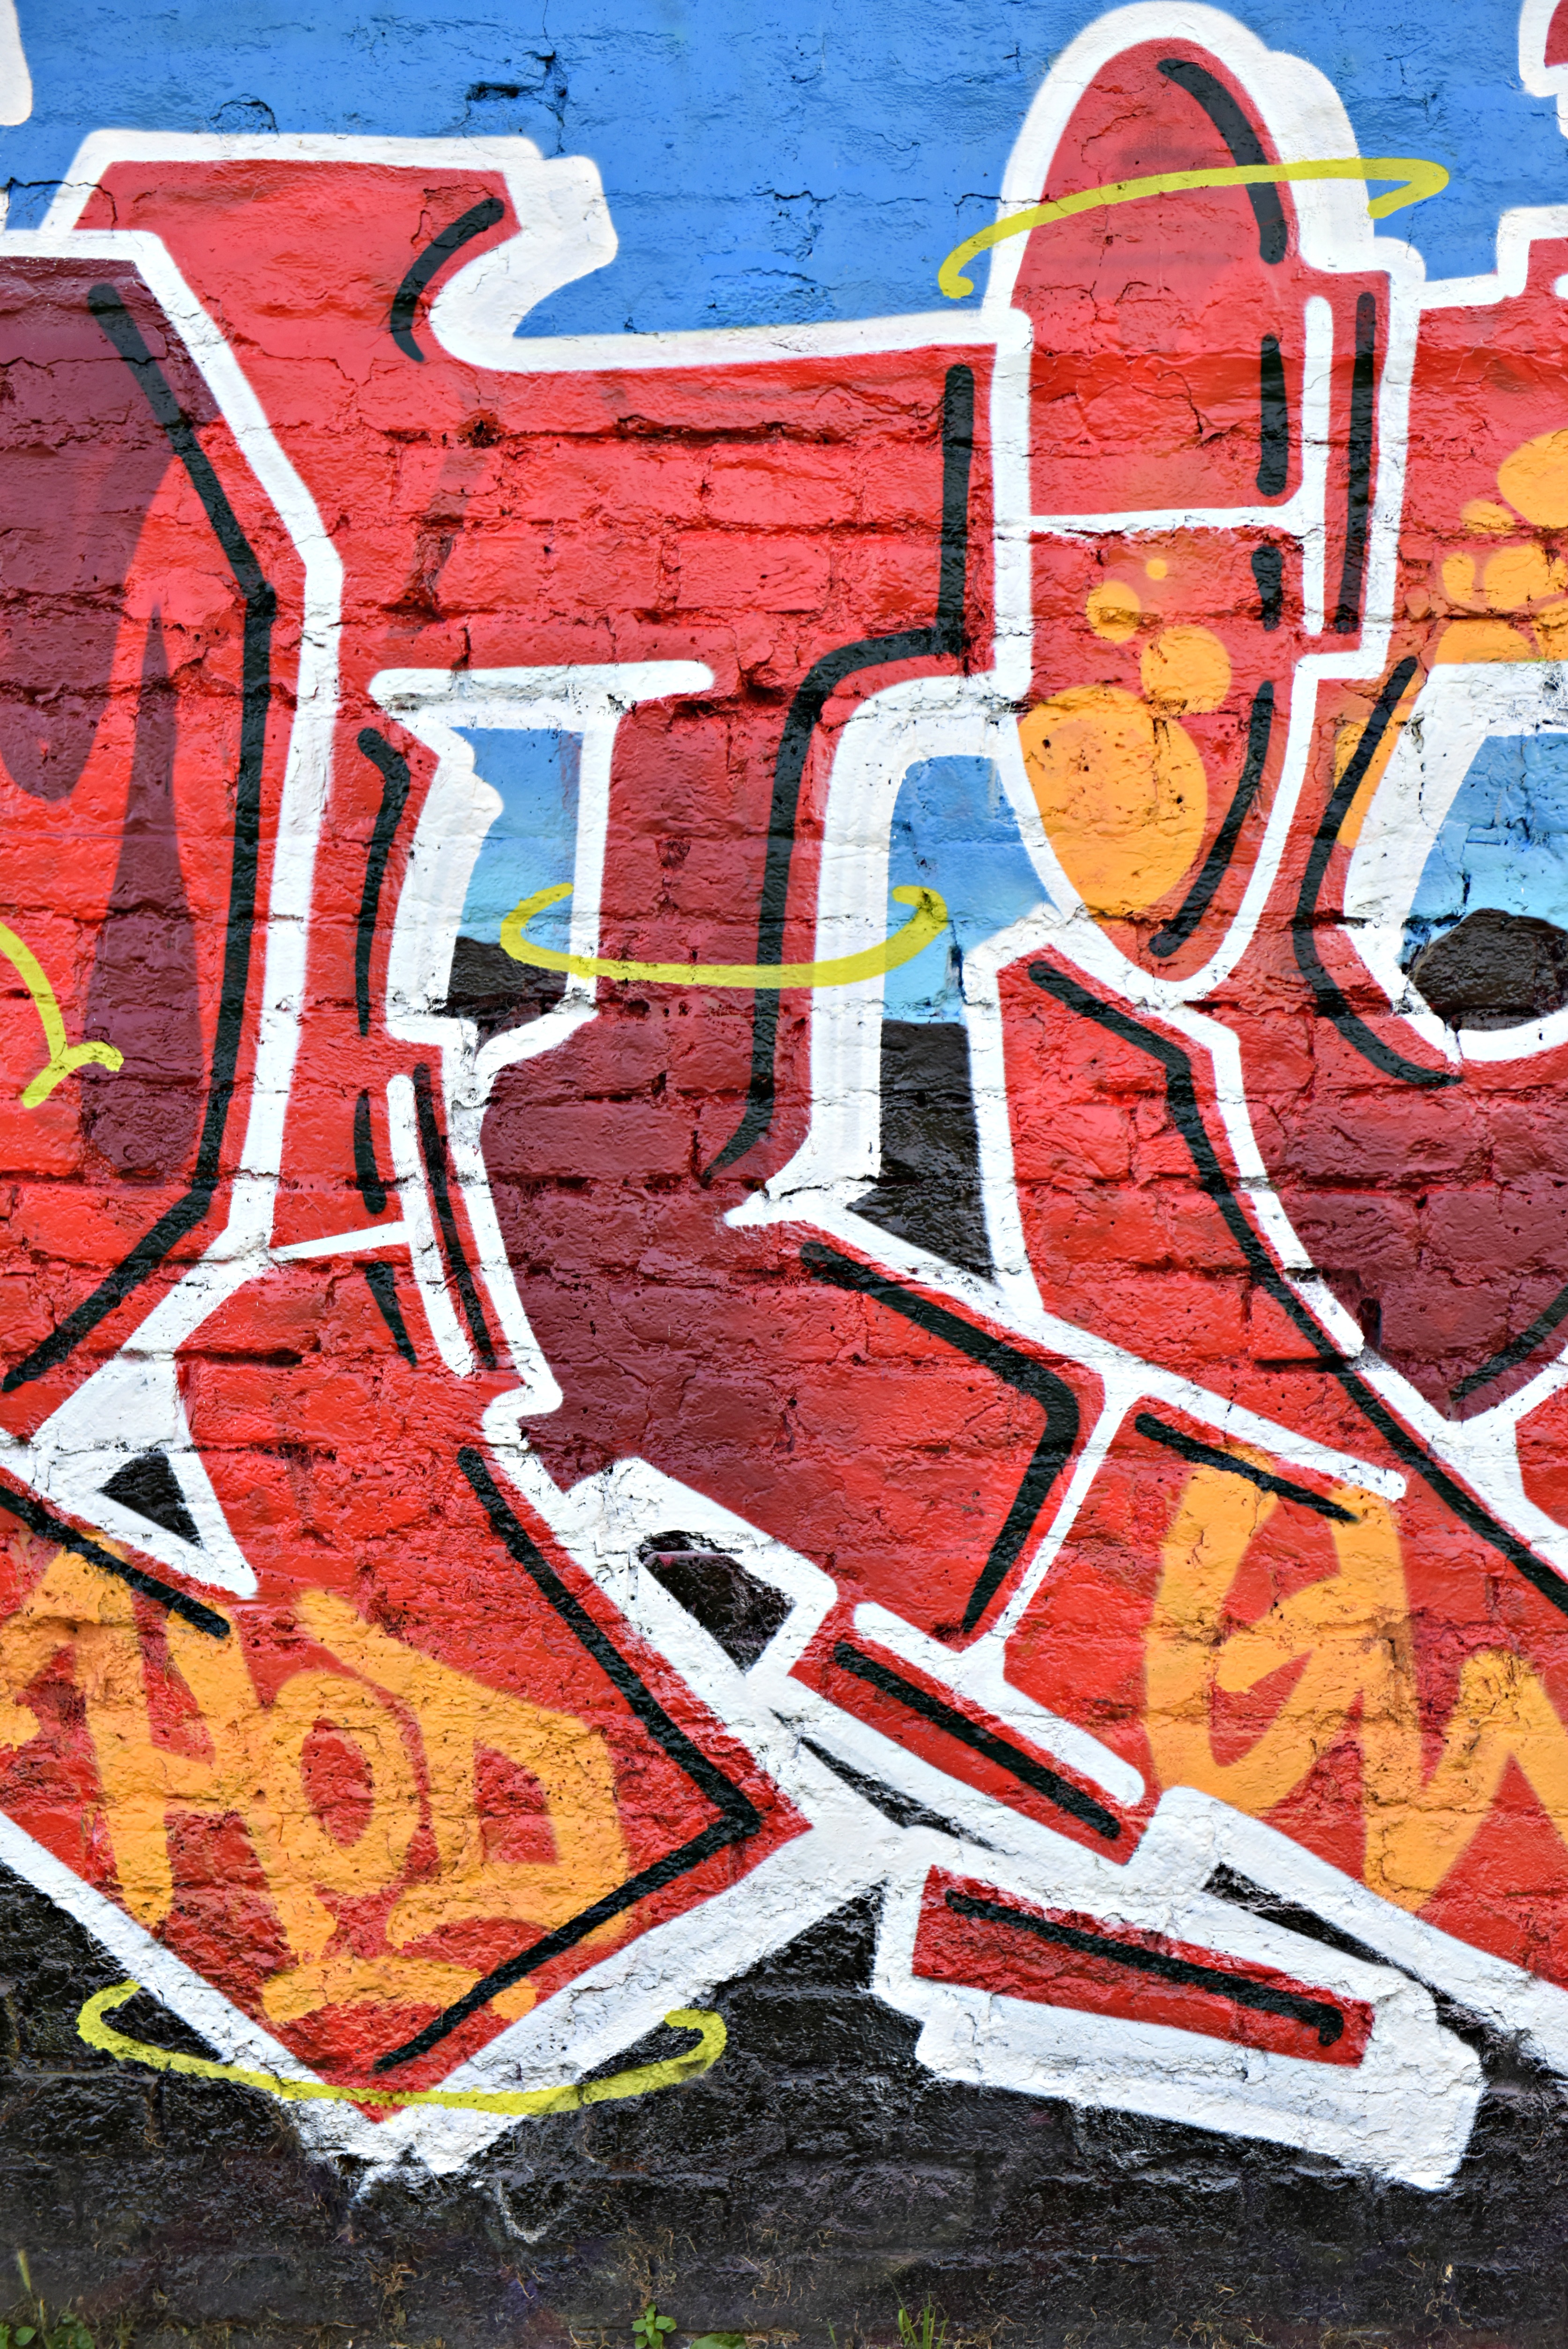 <img src="ana.jpg" alt="ana red and blue graffiti street art"> 